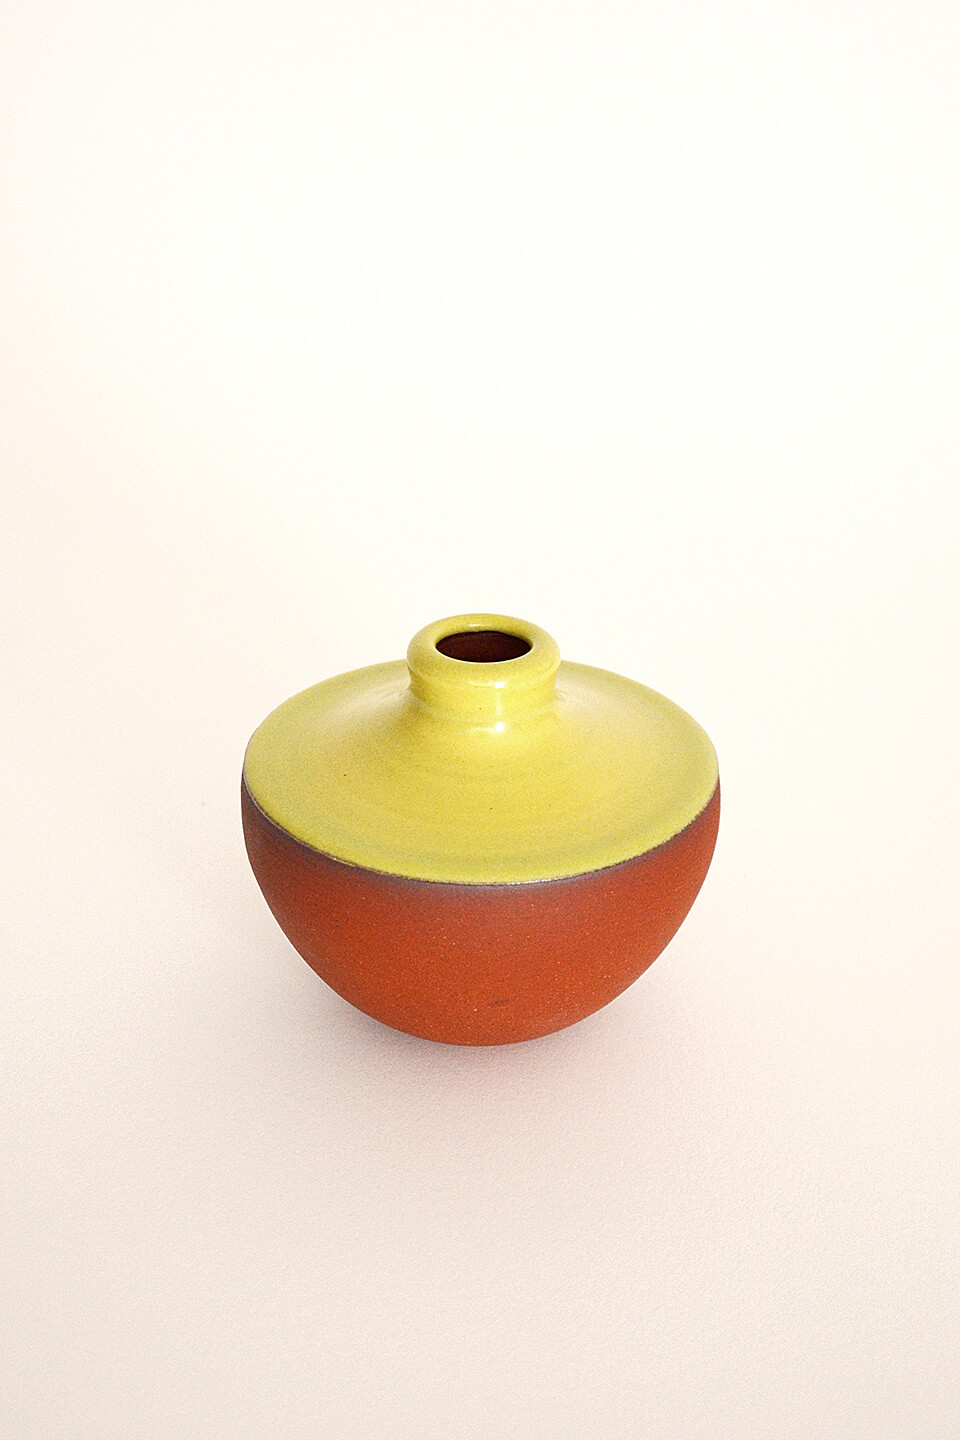 Satin Yellow Green Ceramic Vase No. 650